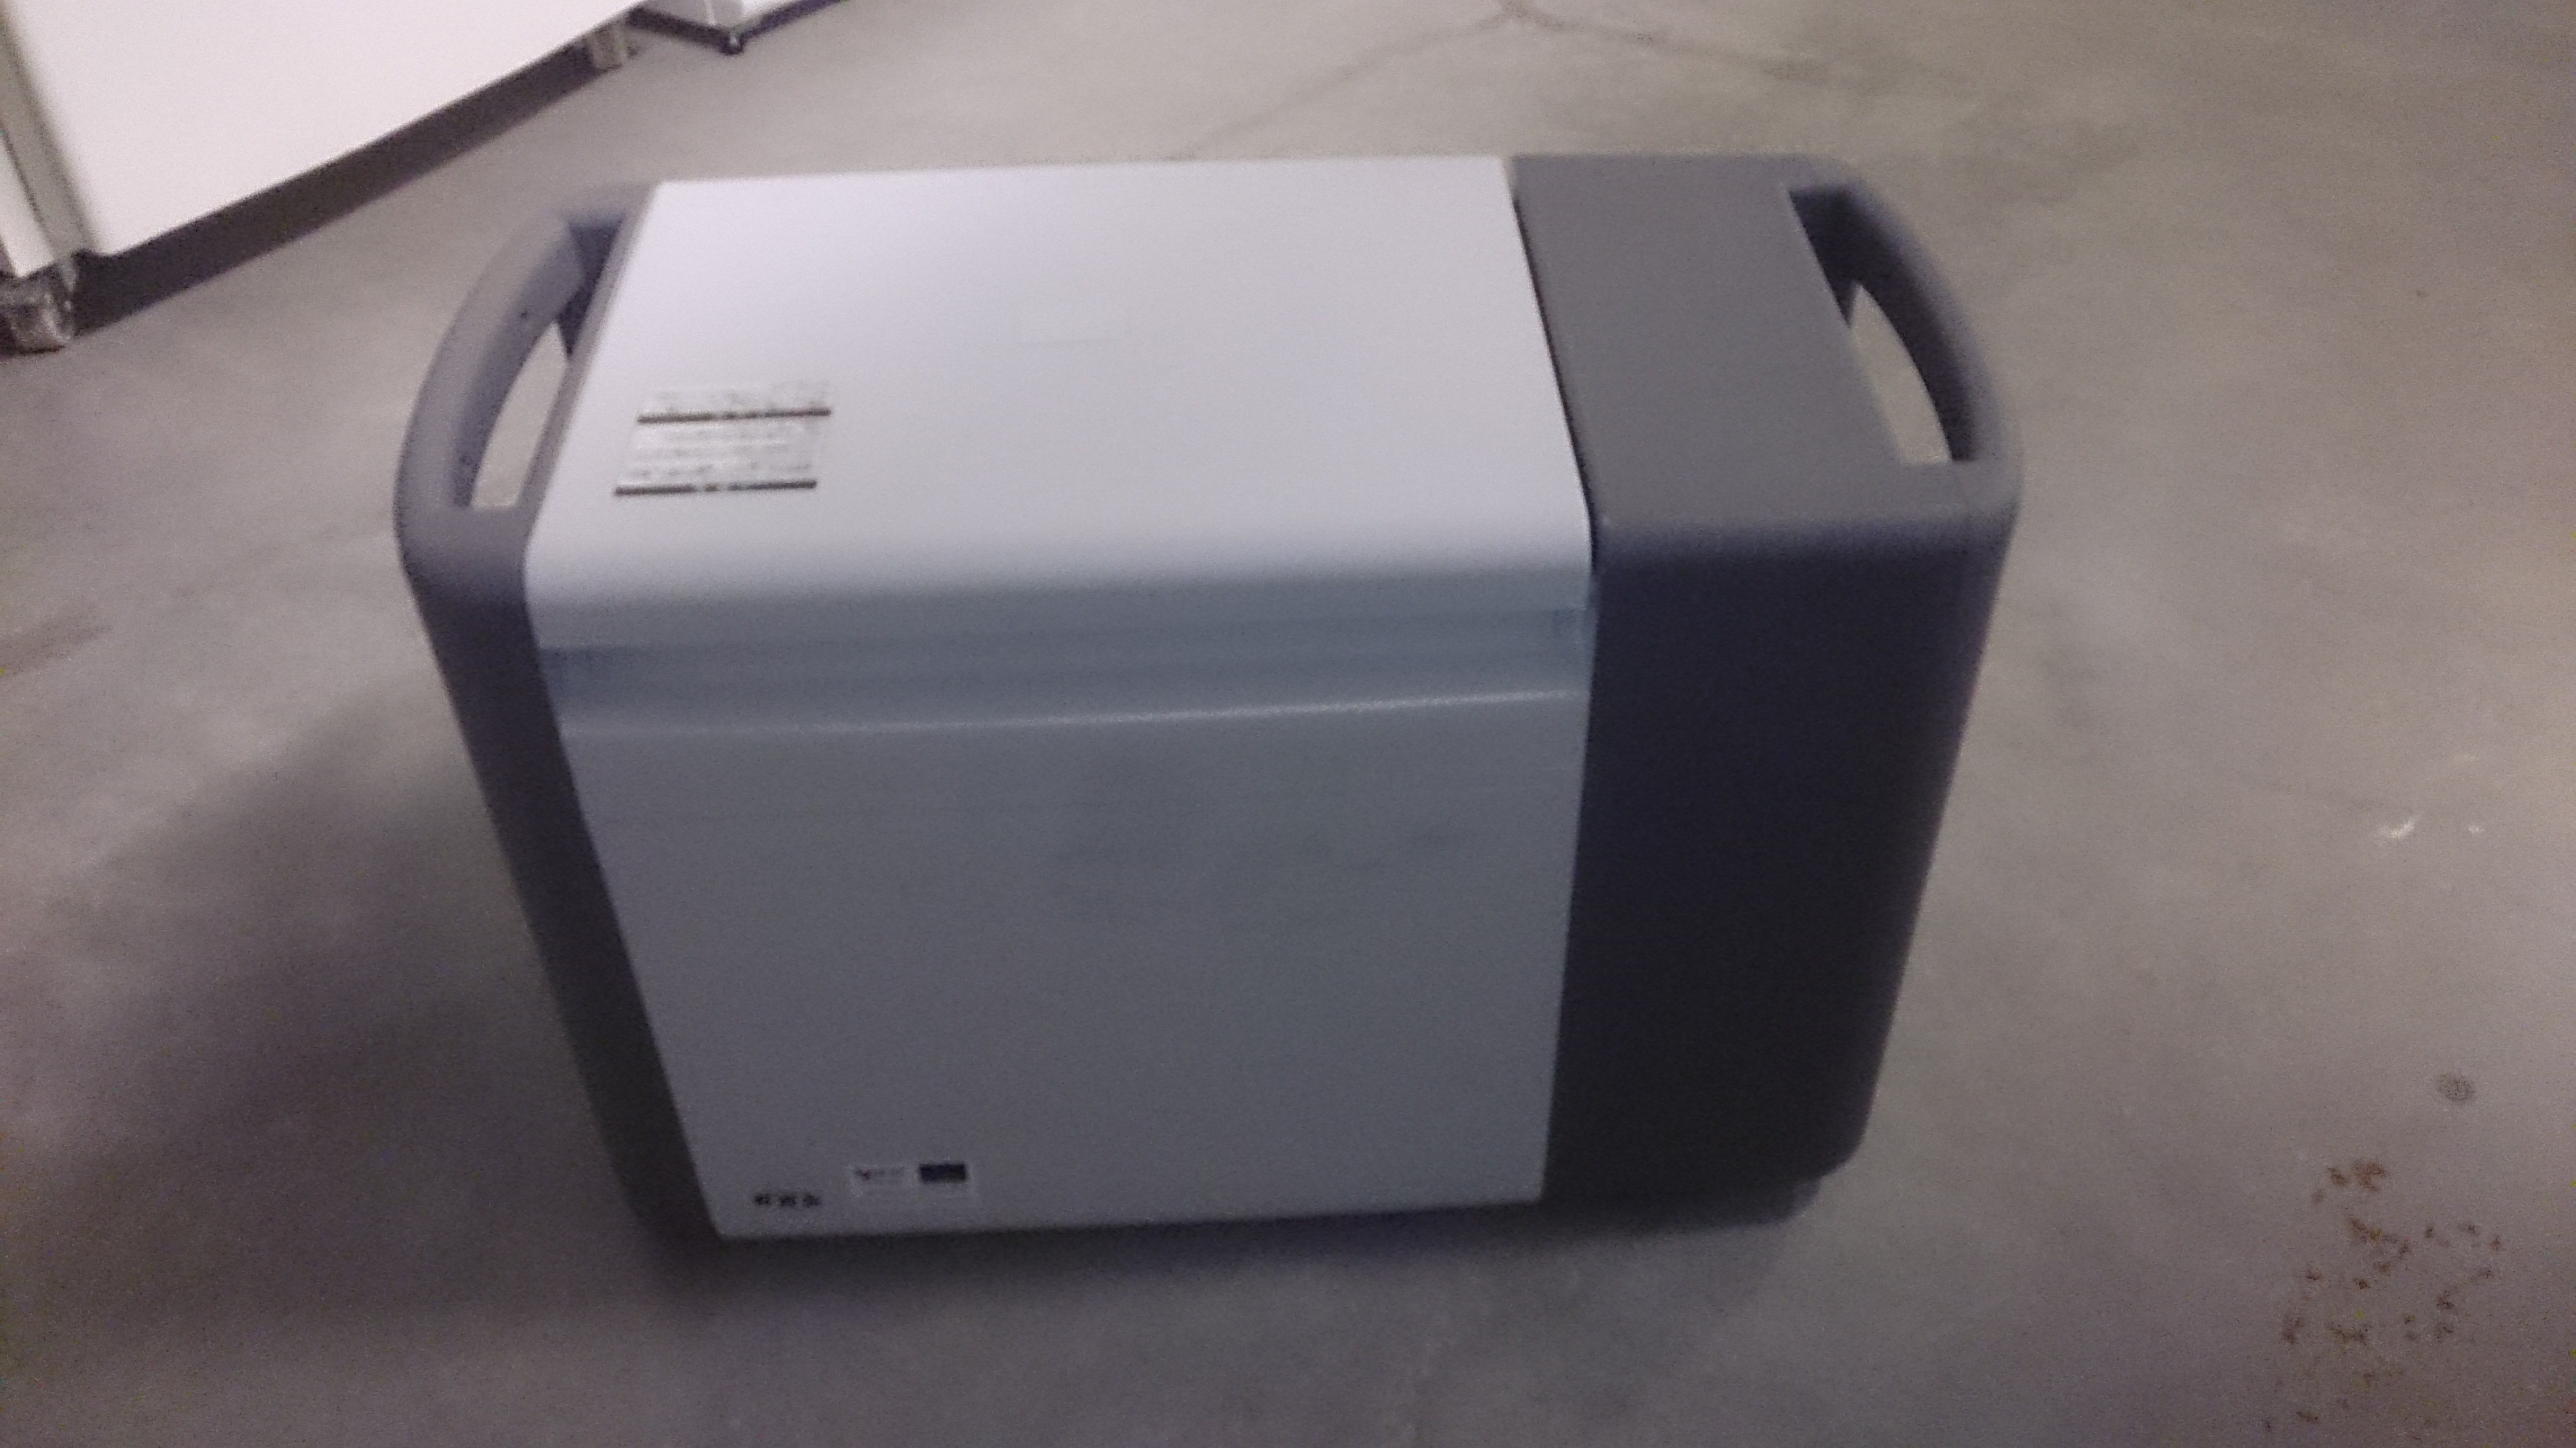 Portable stirling freezer SF4025, Telstar